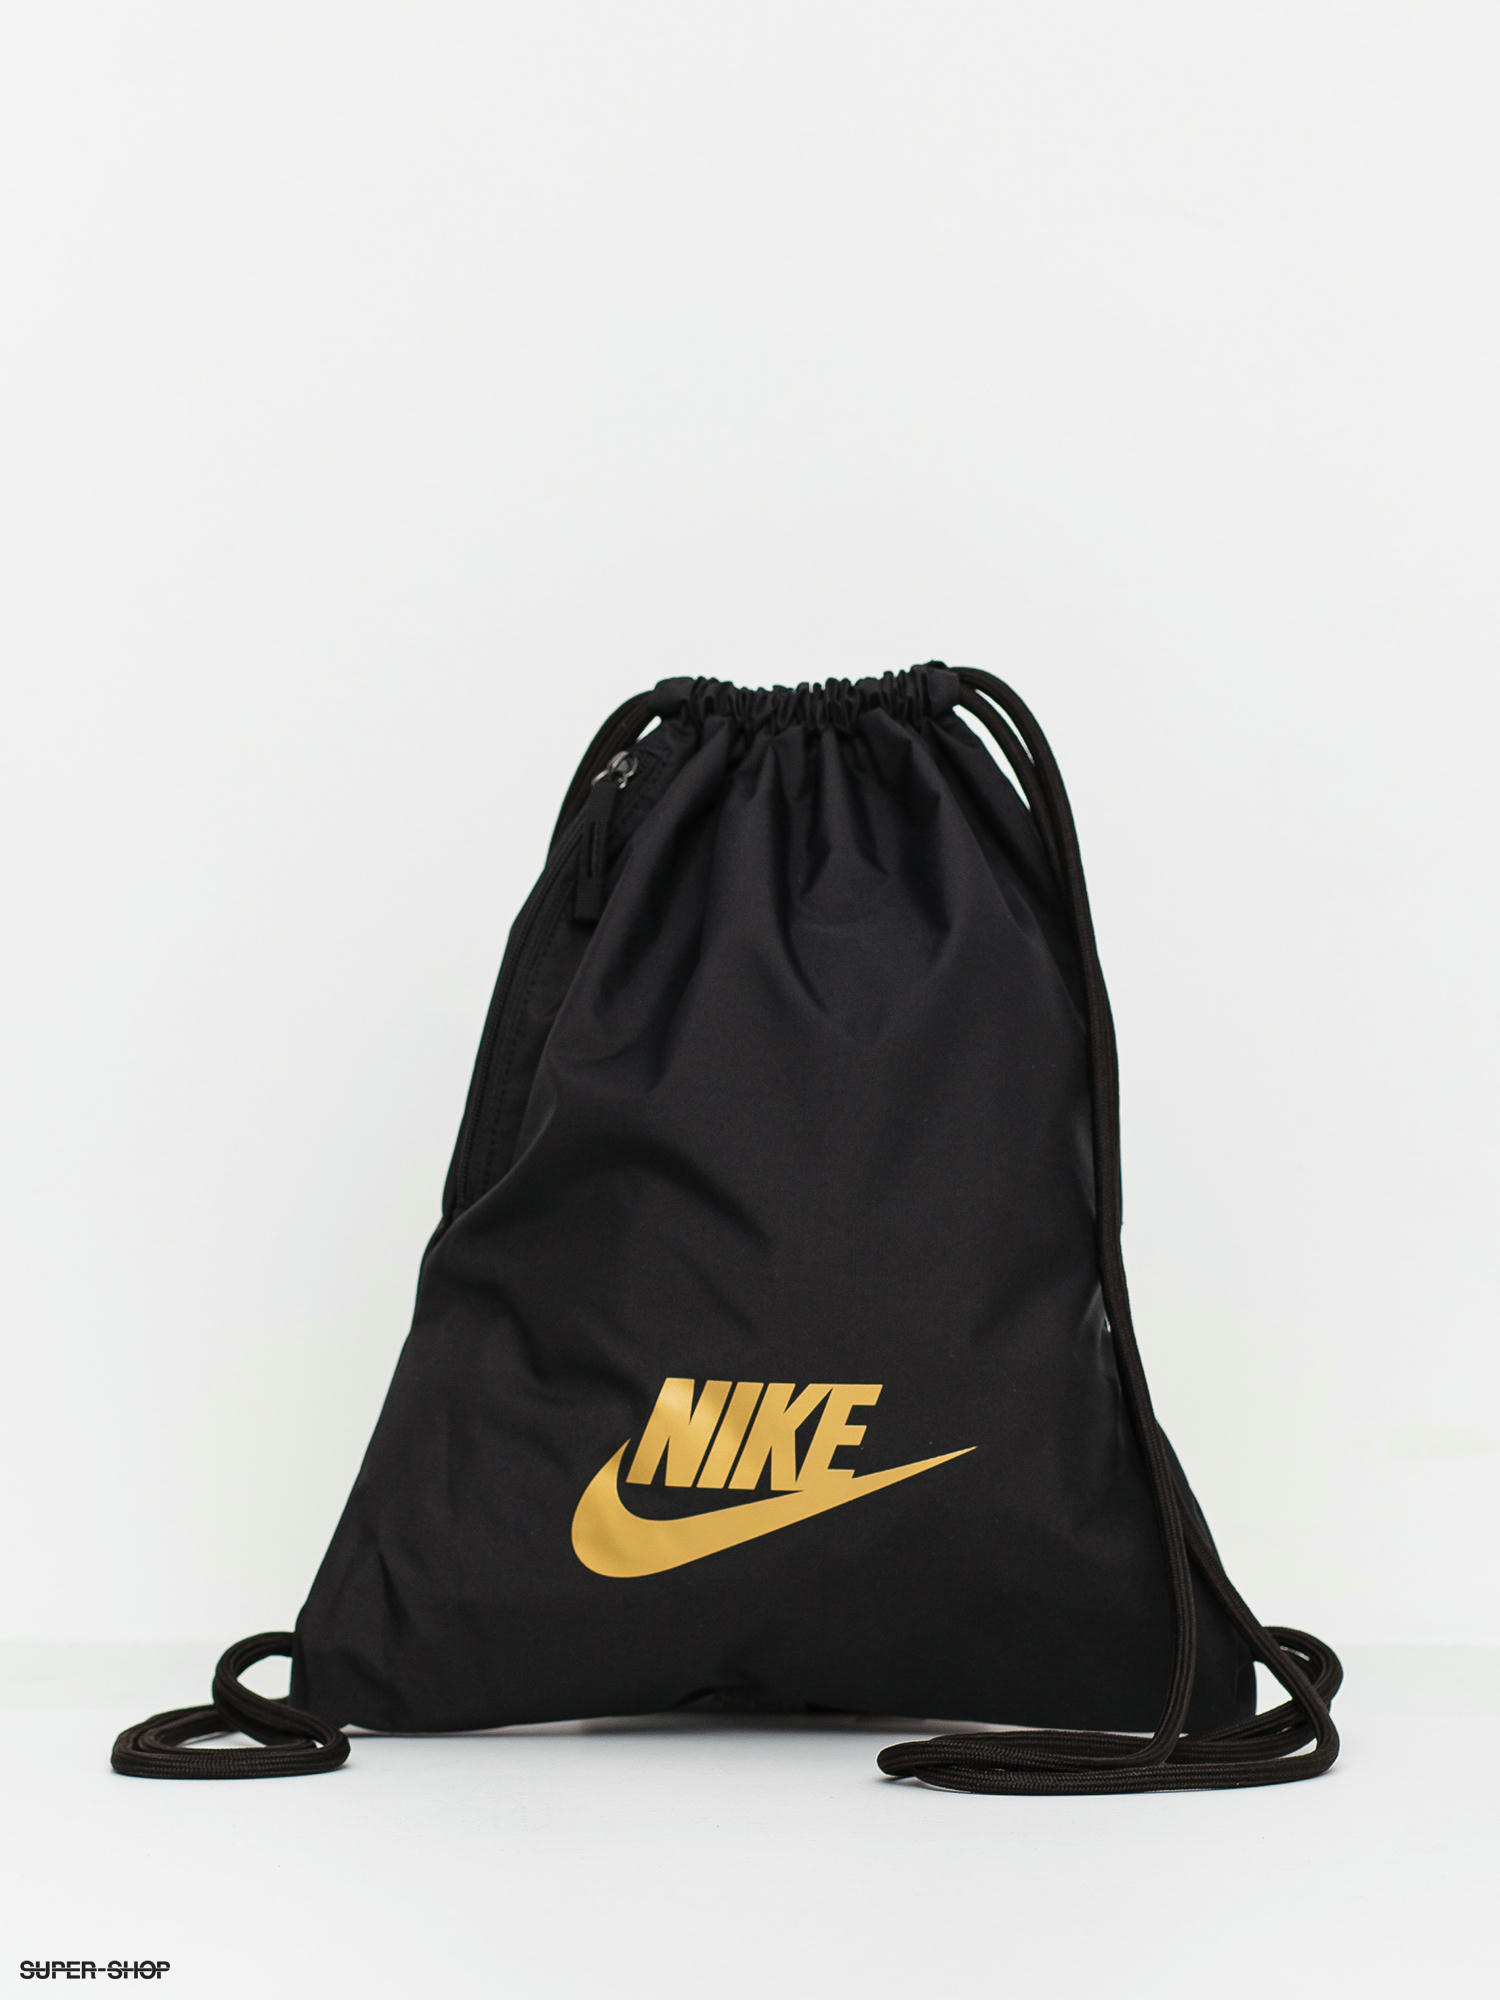 black and gold nike bag